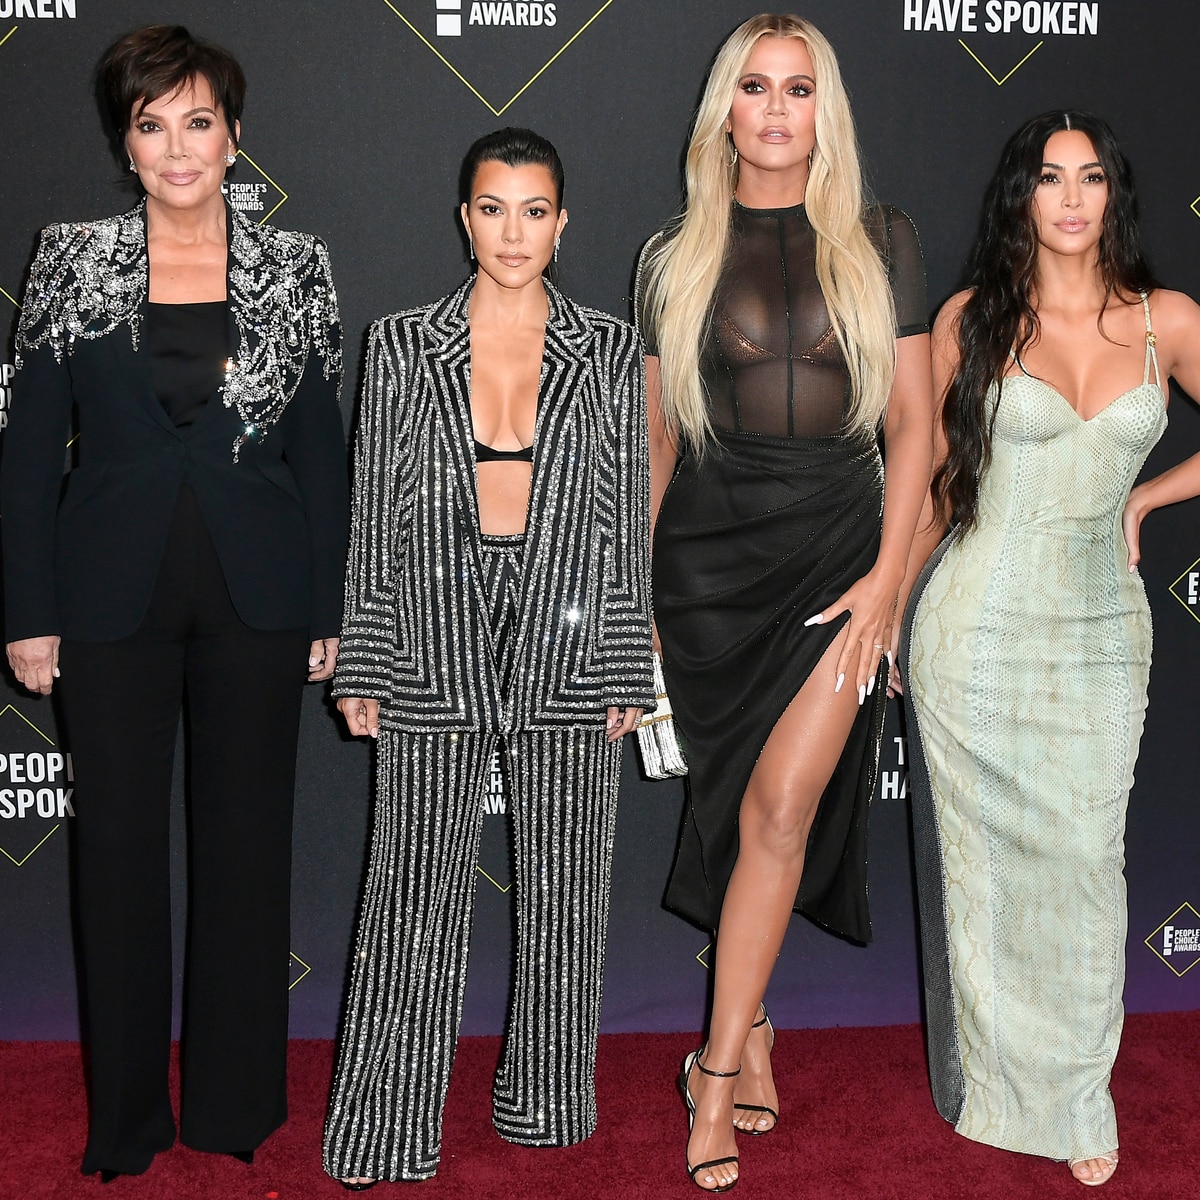 Kris Jenner, Kim Kardashian, Khloe Kardashian, Kourtney Kardashian